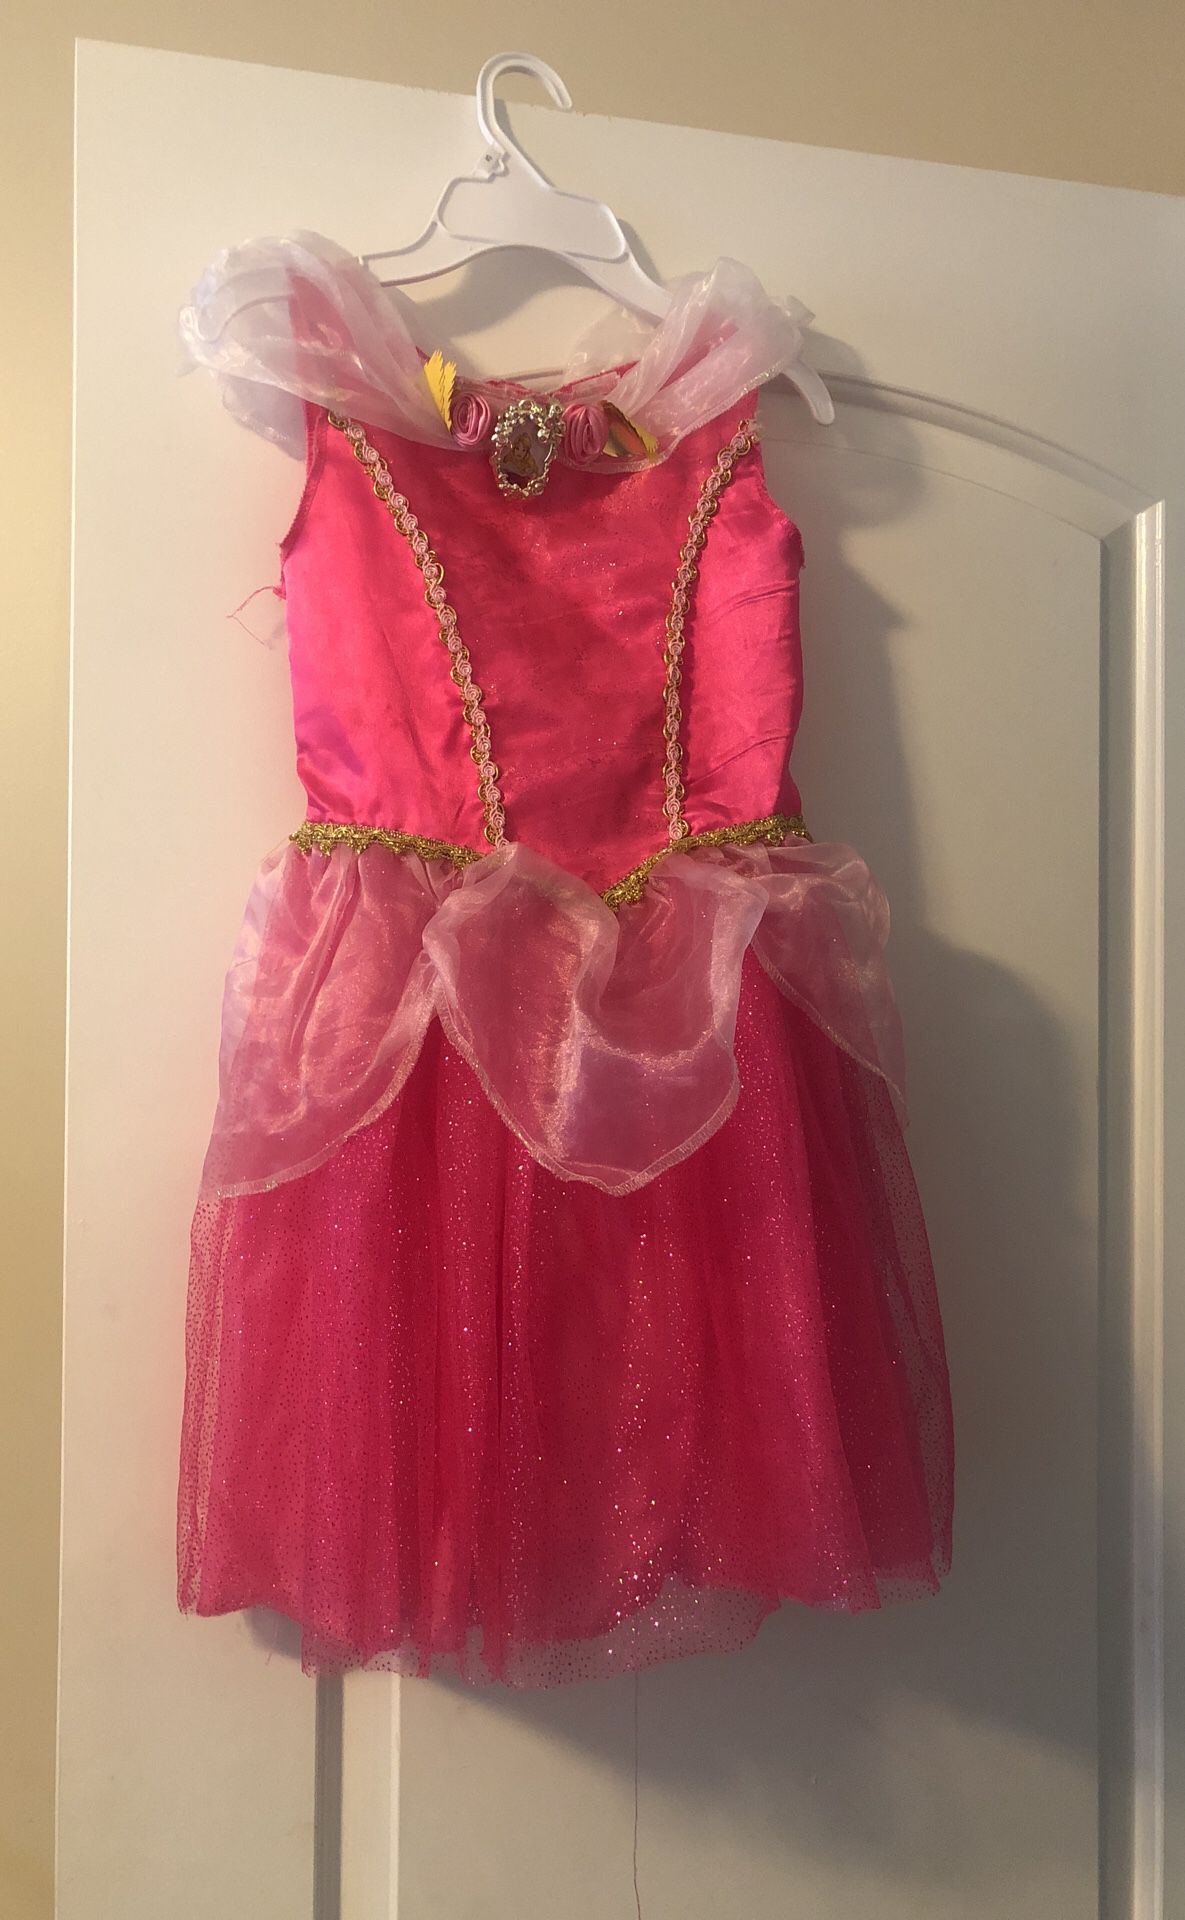 Princess costume size 4-6